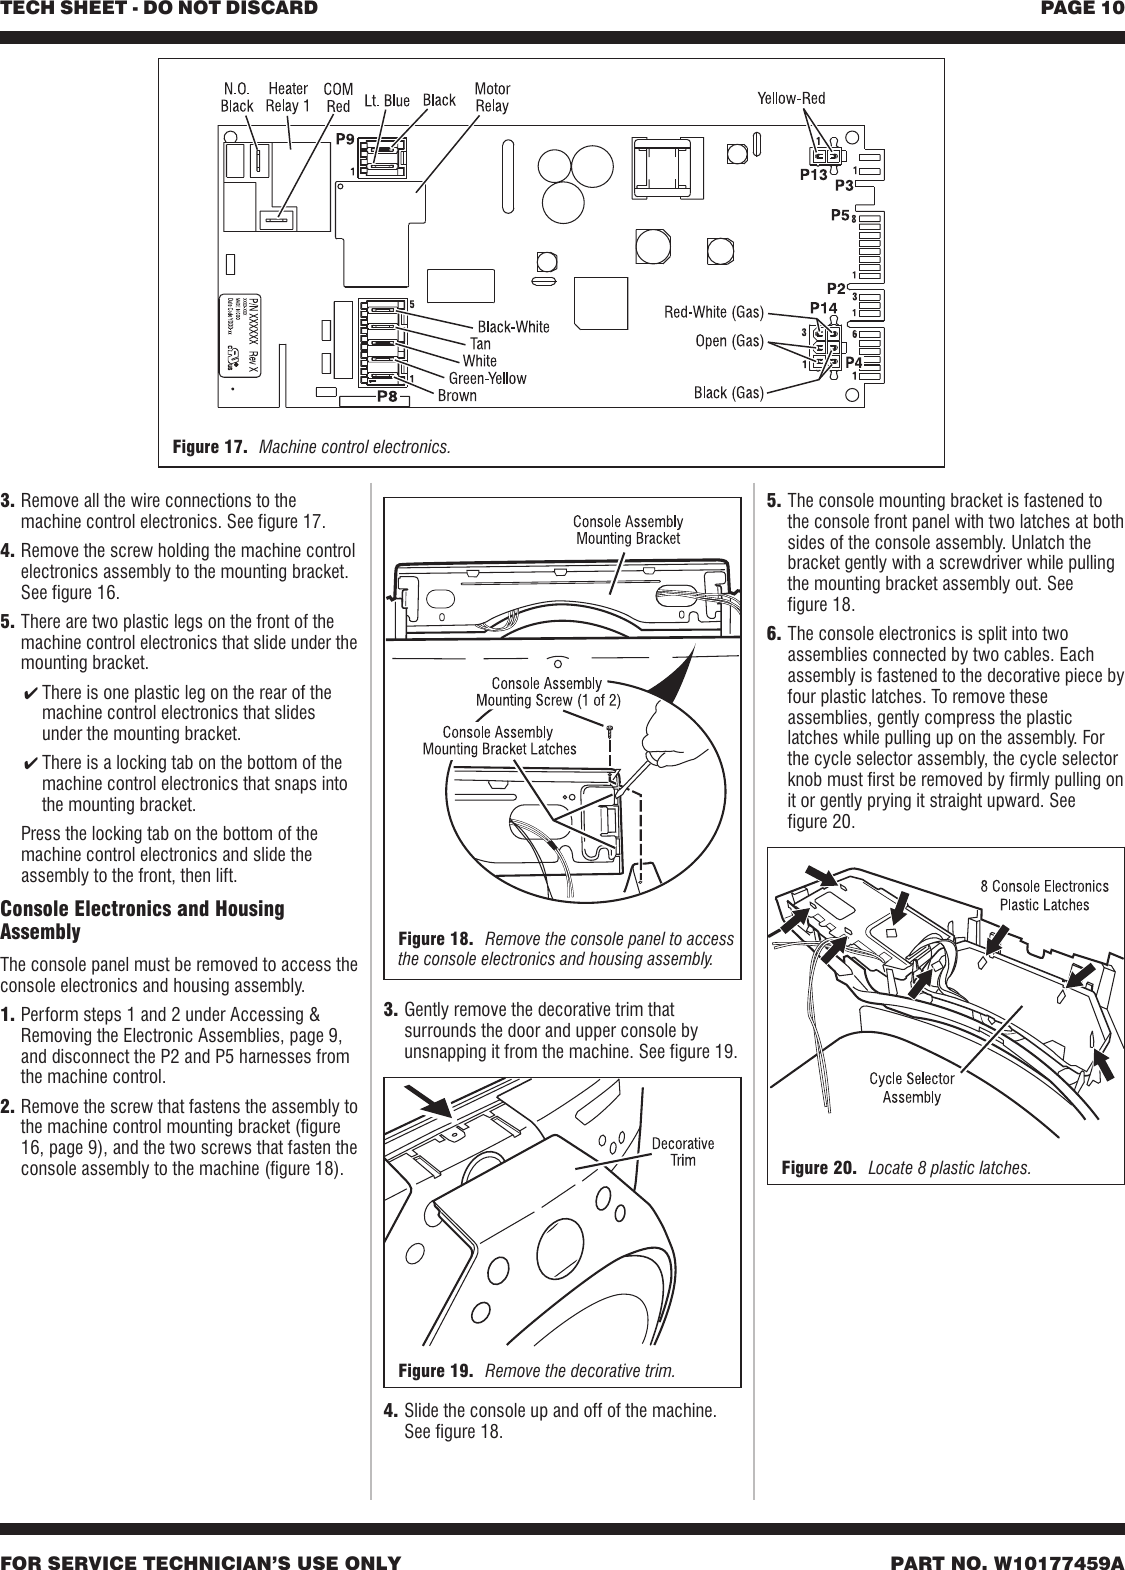 Page 10 of 12 - ZB80281_W10177459A.vp  W10177459A - Whirlpool Duet Sport Dryer Tech Sheet